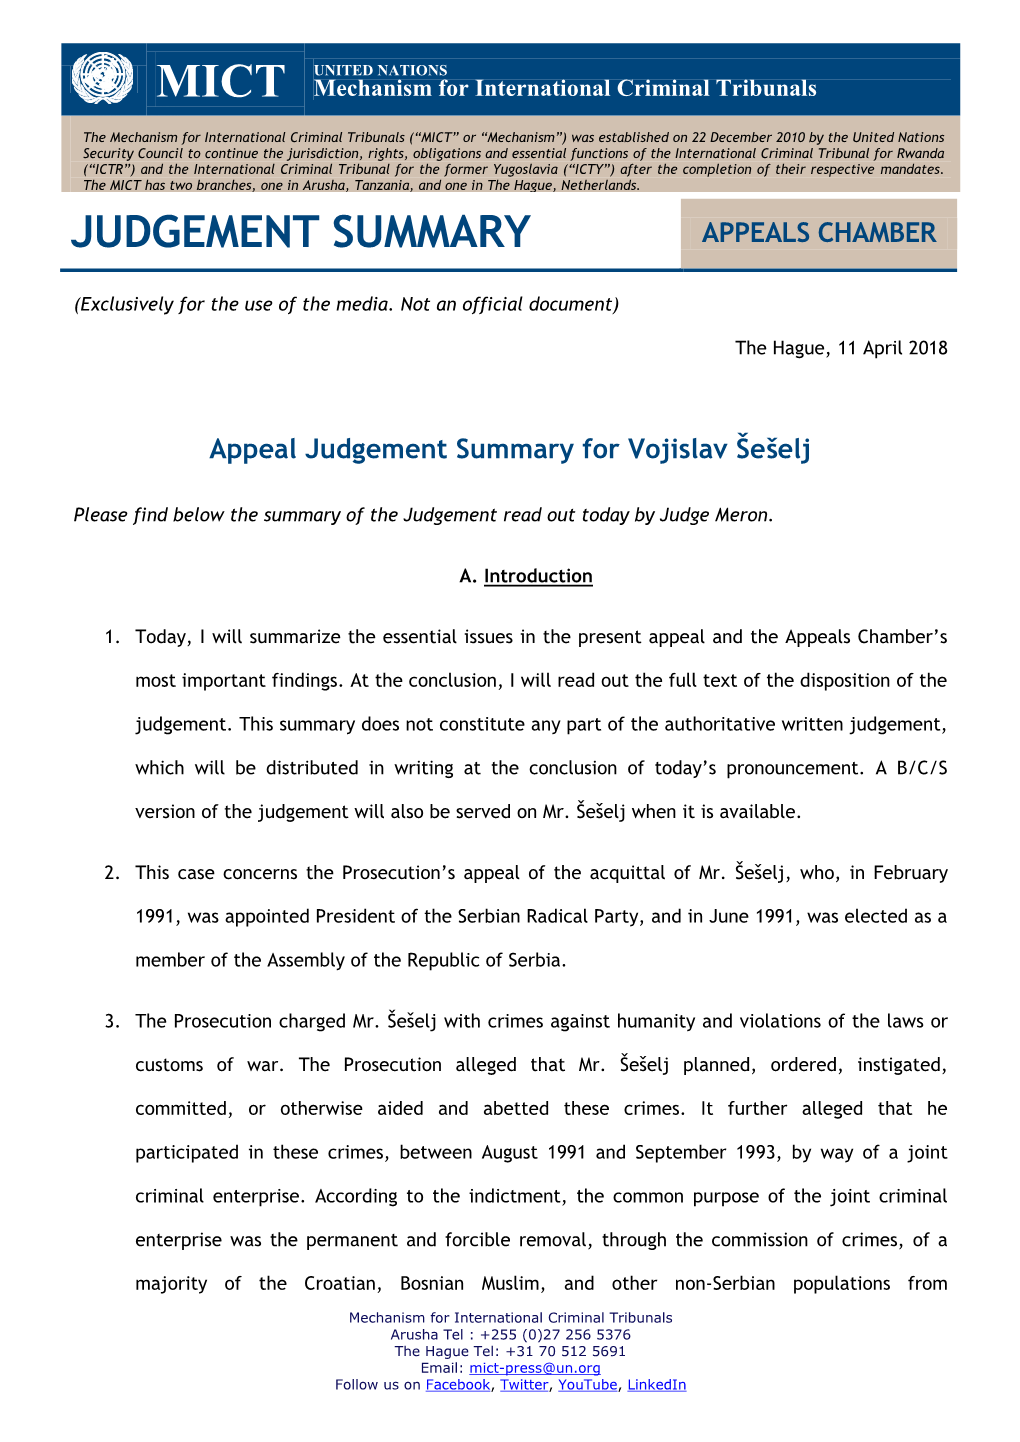 Appeal Judgement Summary for Vojislav Šešelj